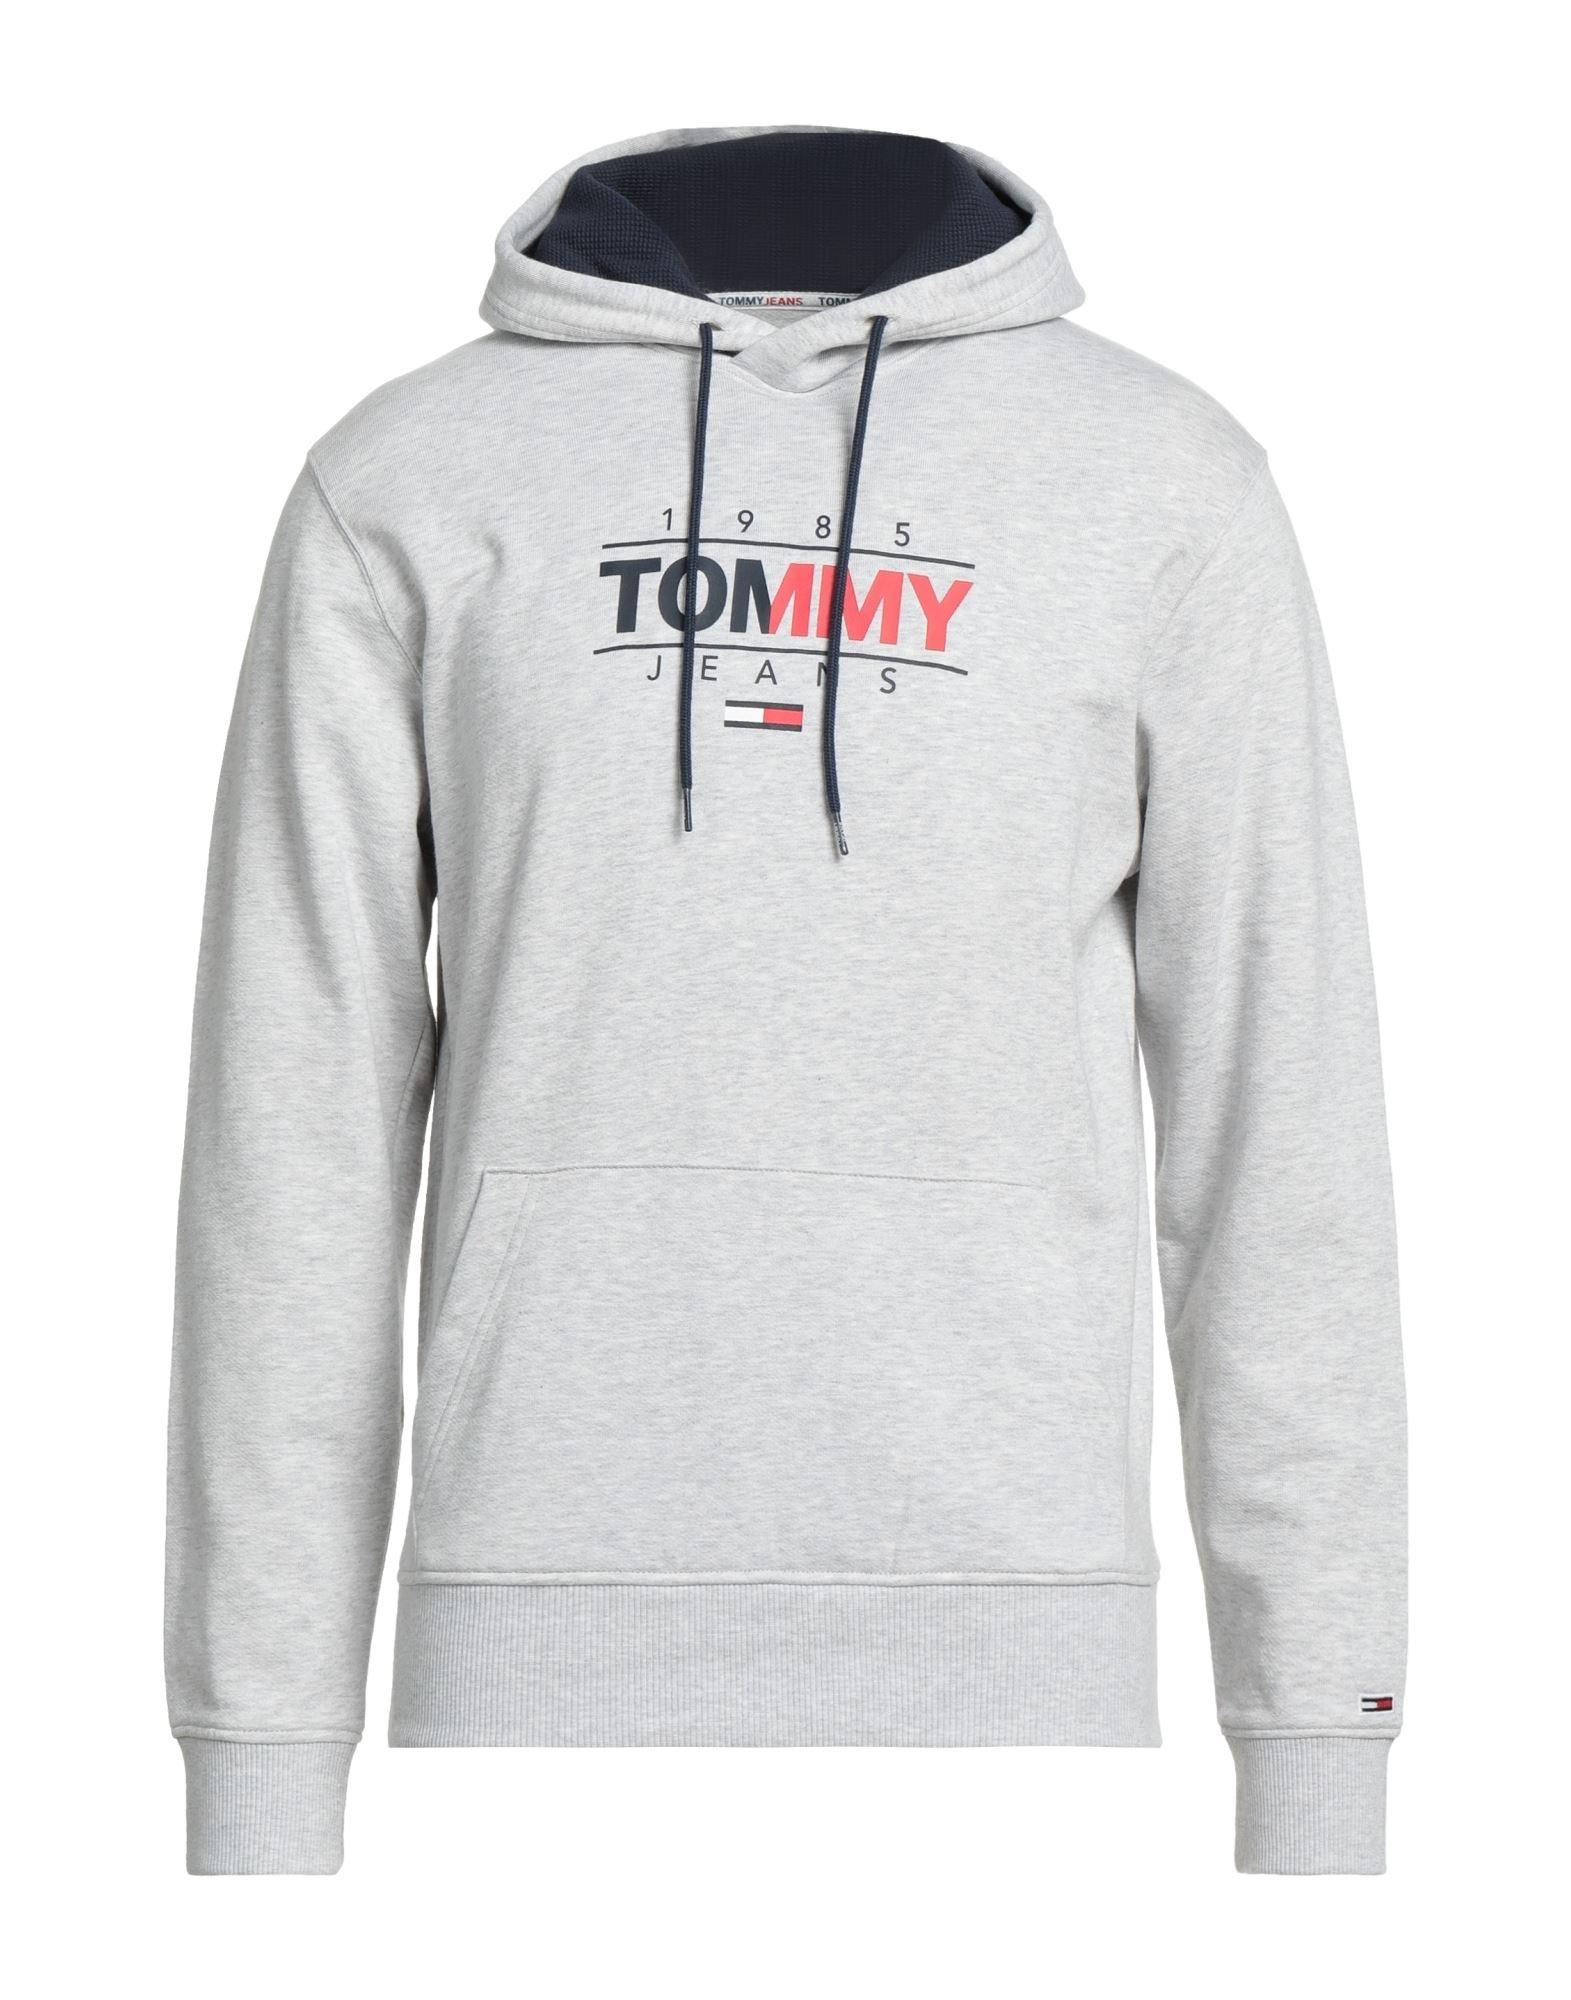 Tommy Hilfiger Sweatshirt for Men | Lyst